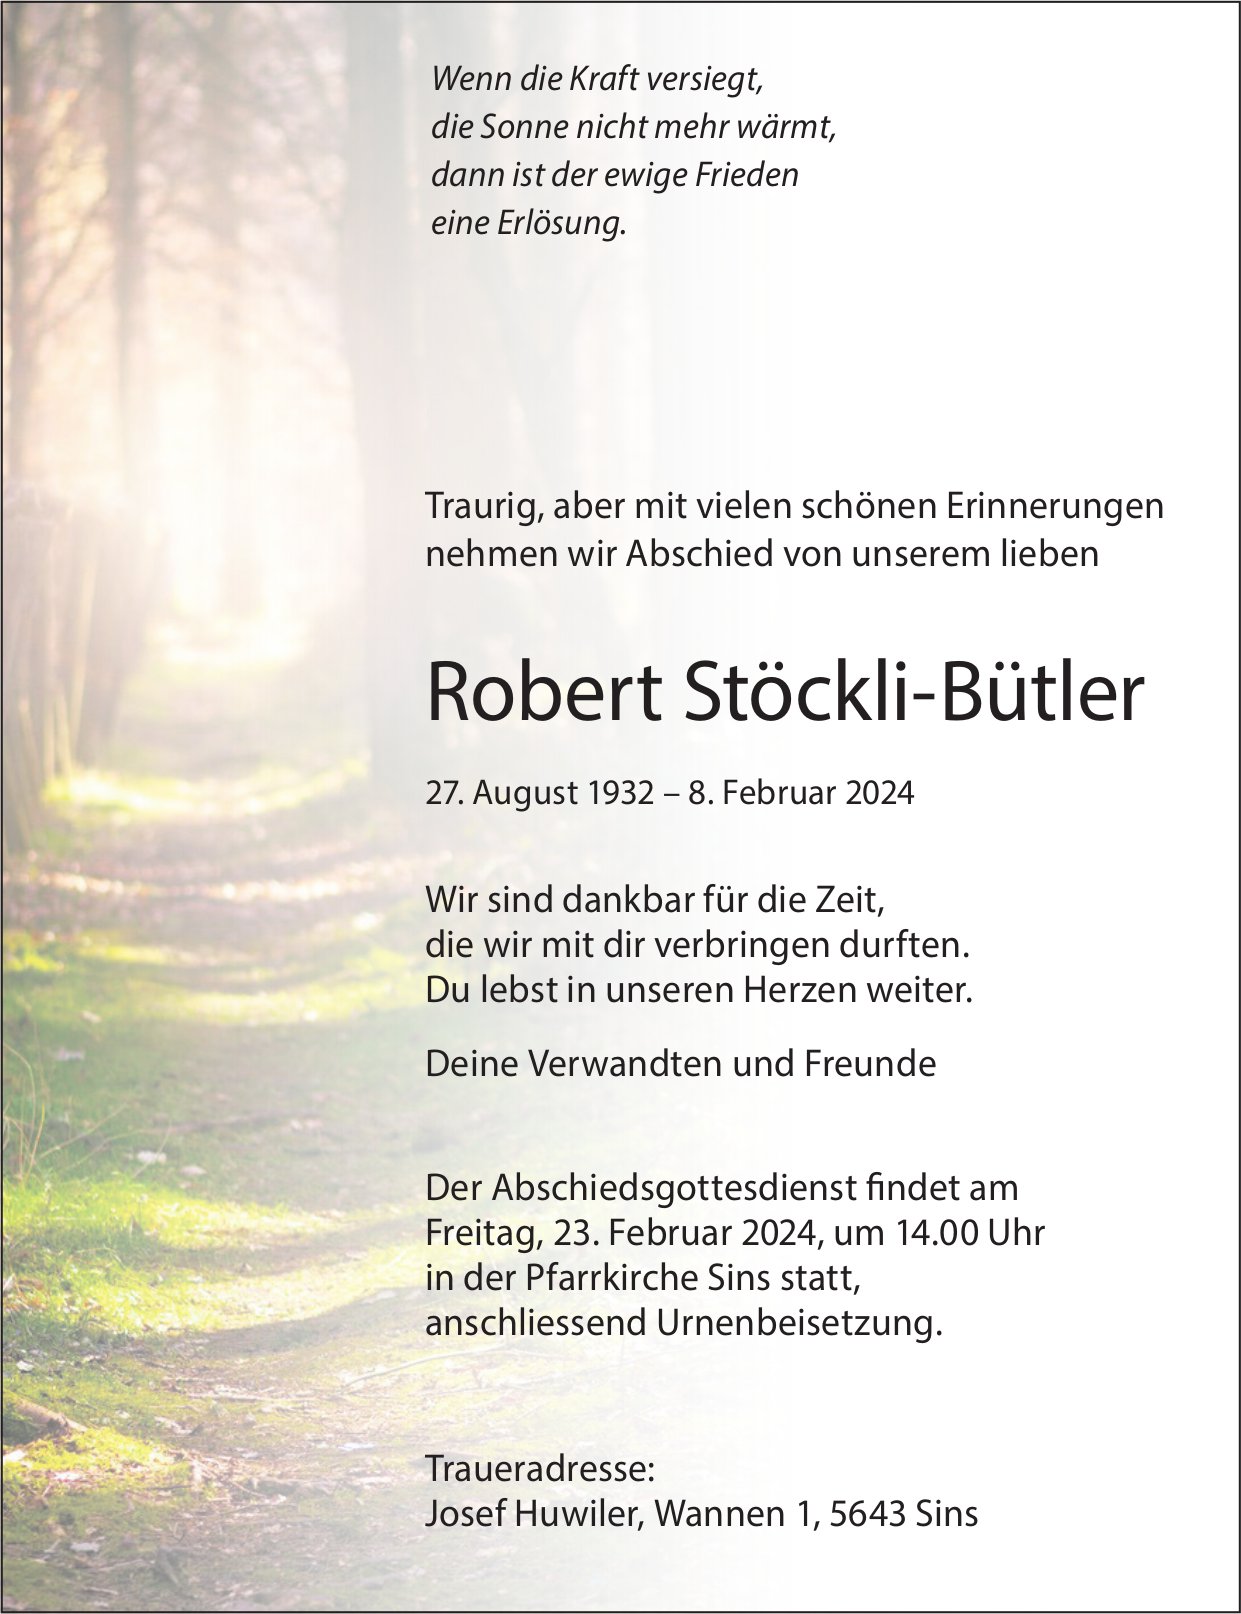 Stöckli-Bütler Robert, Februar 2024 / TA